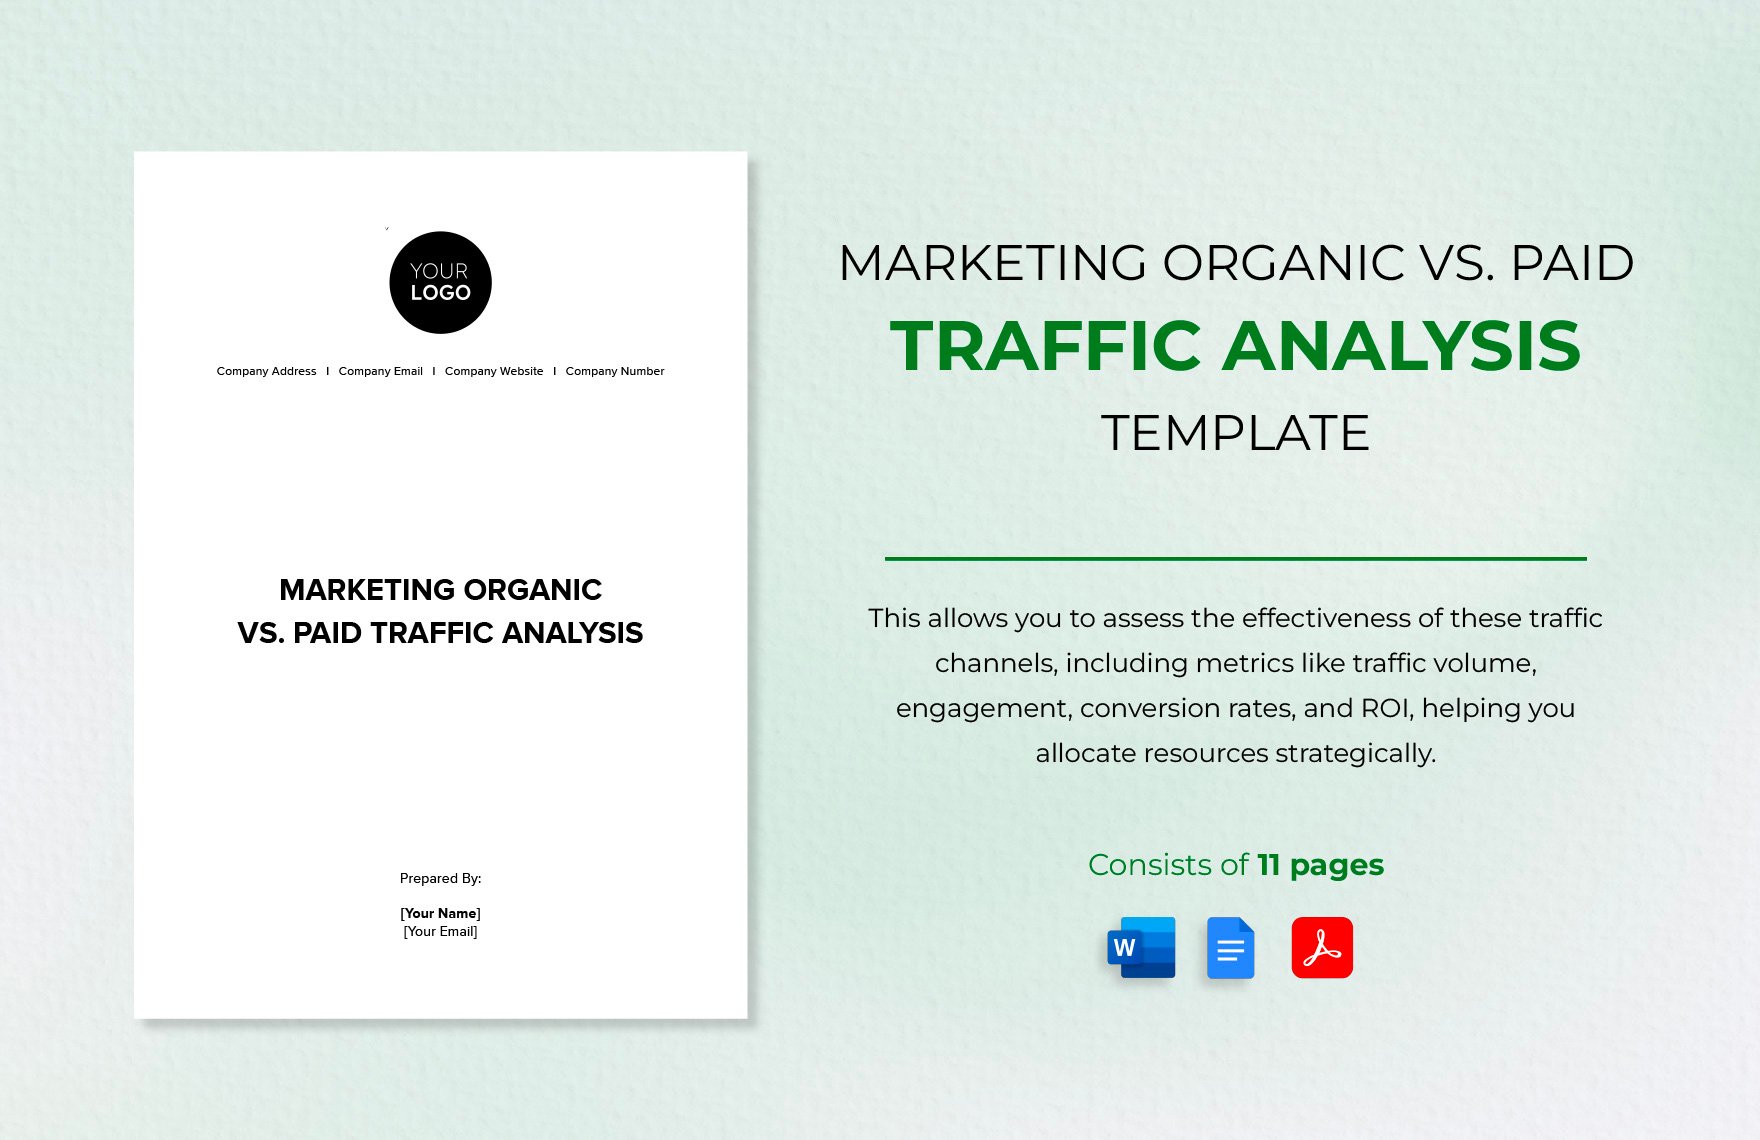 Marketing Organic vs. Paid Traffic Analysis Template